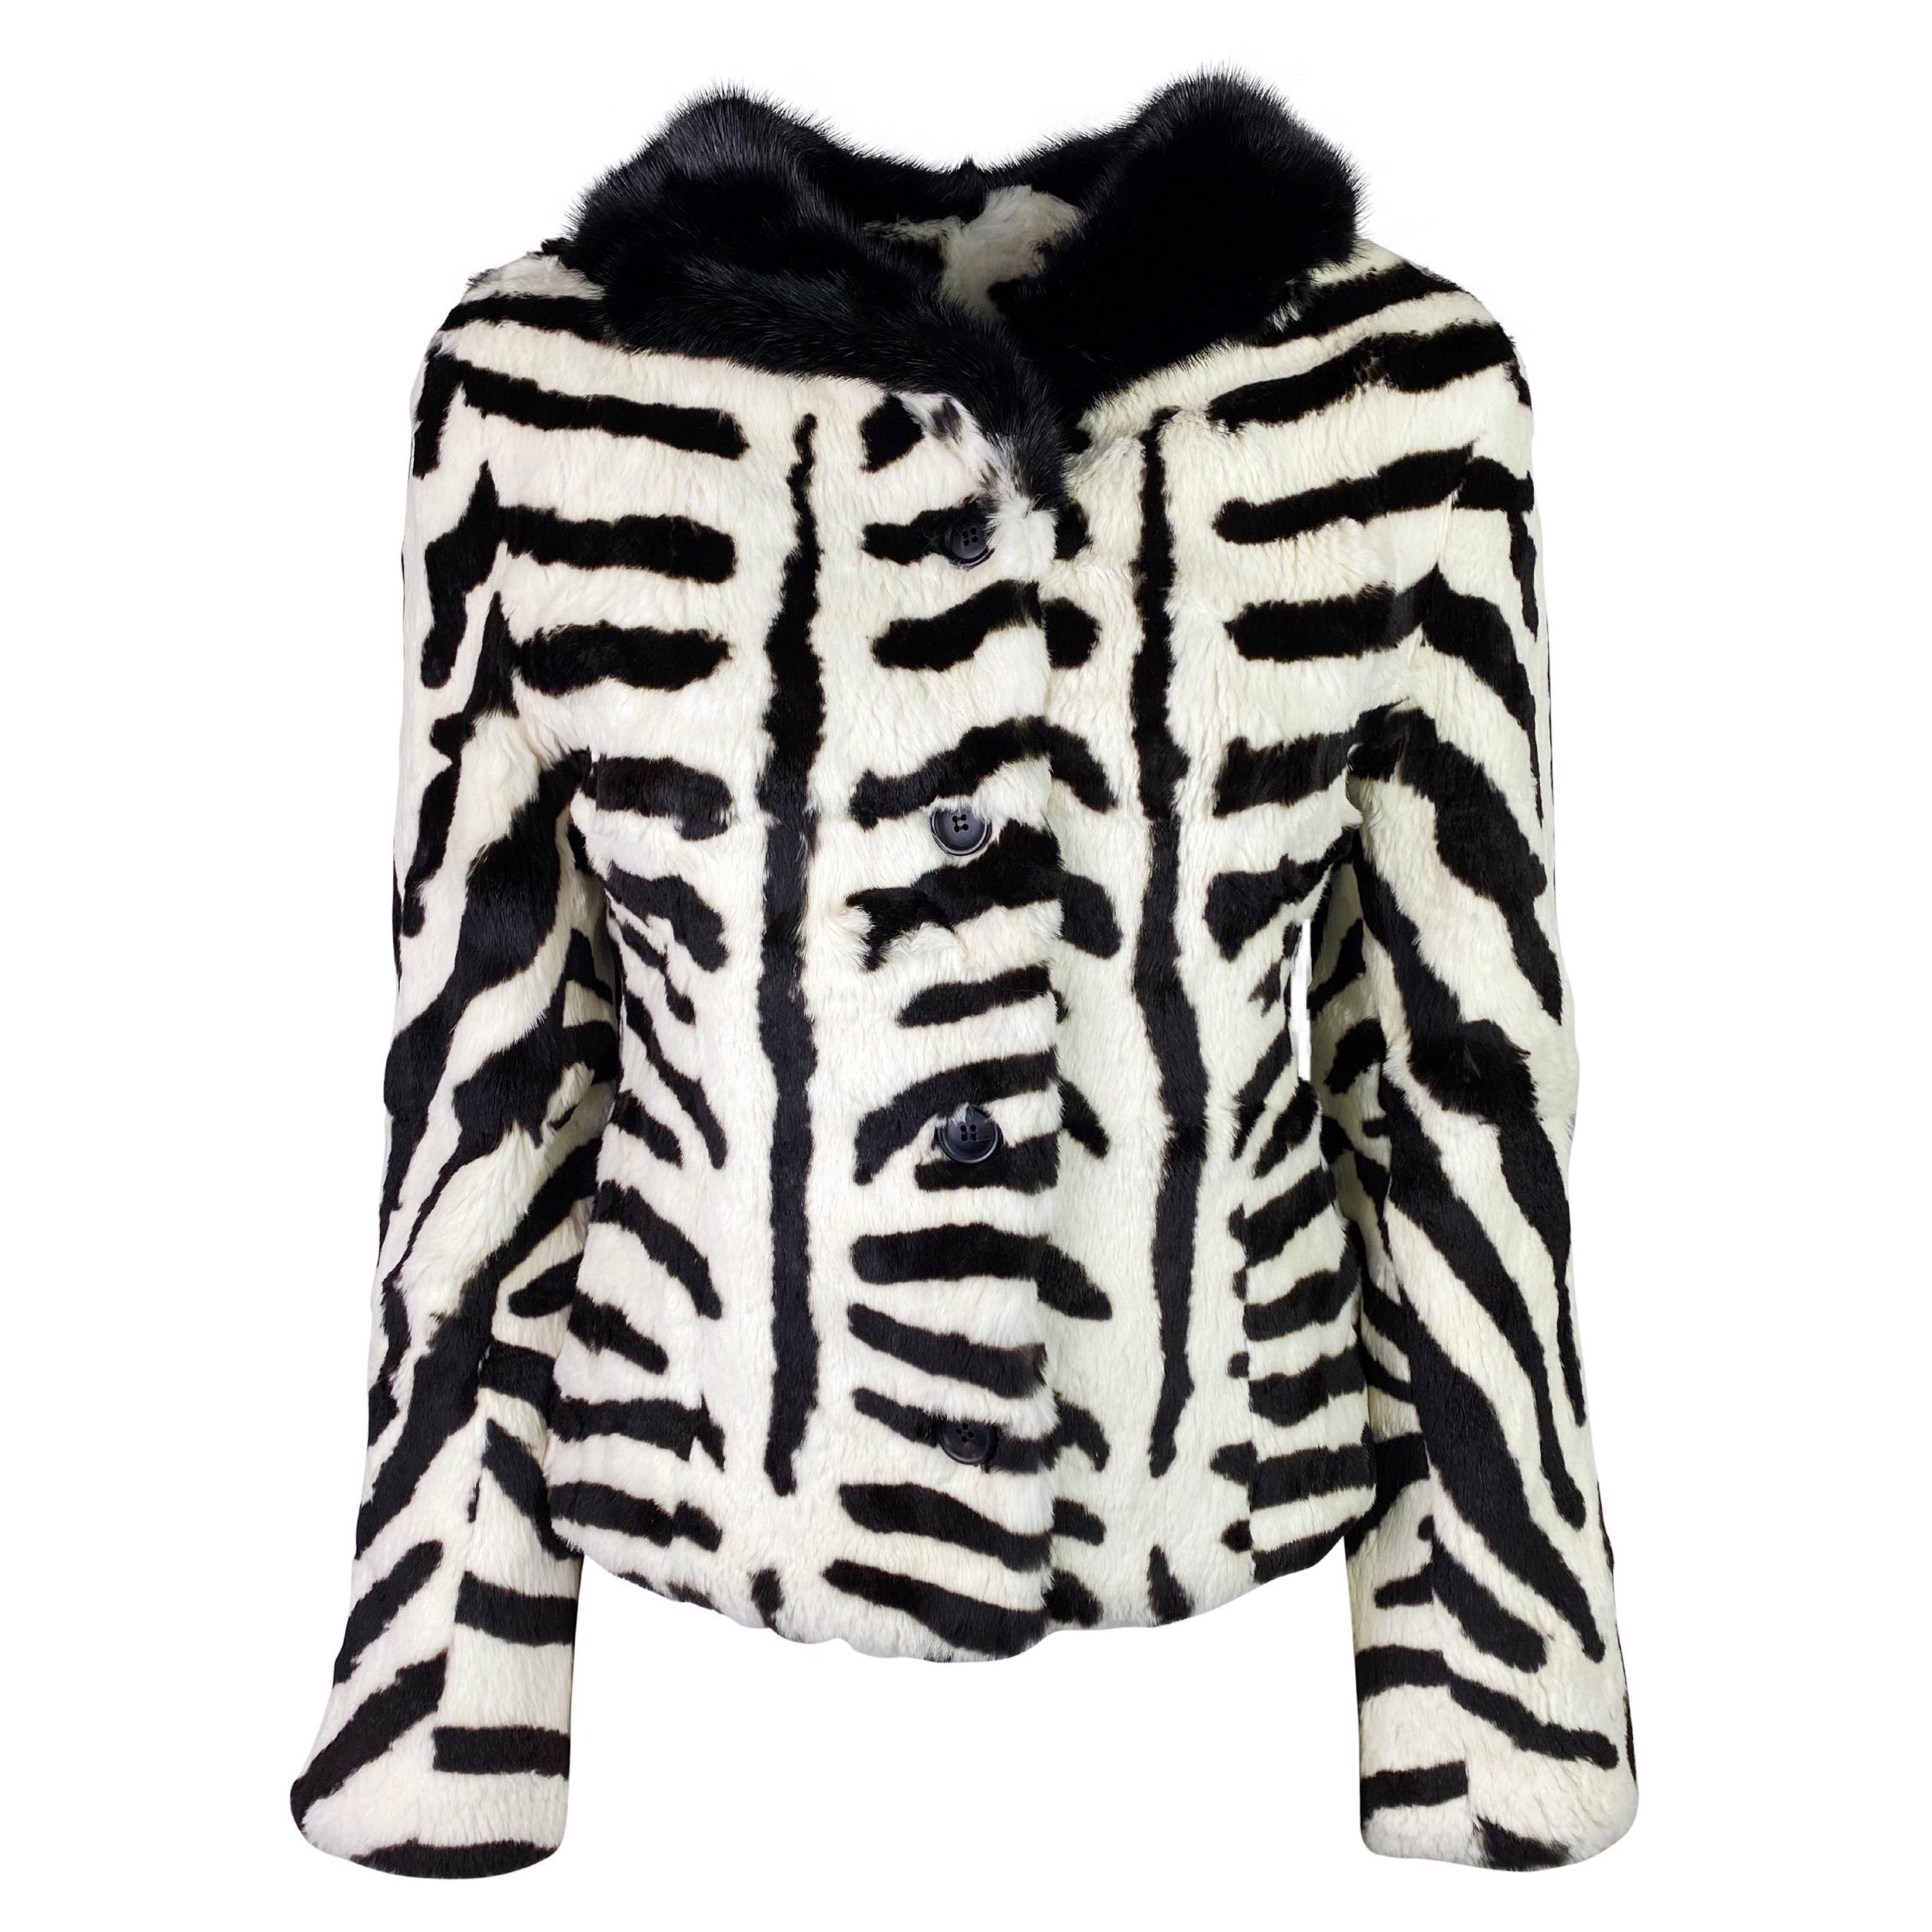 Dolce & Gabbana Fall 1999 Zebra Print Fur Jacket with Mink Collar For Sale